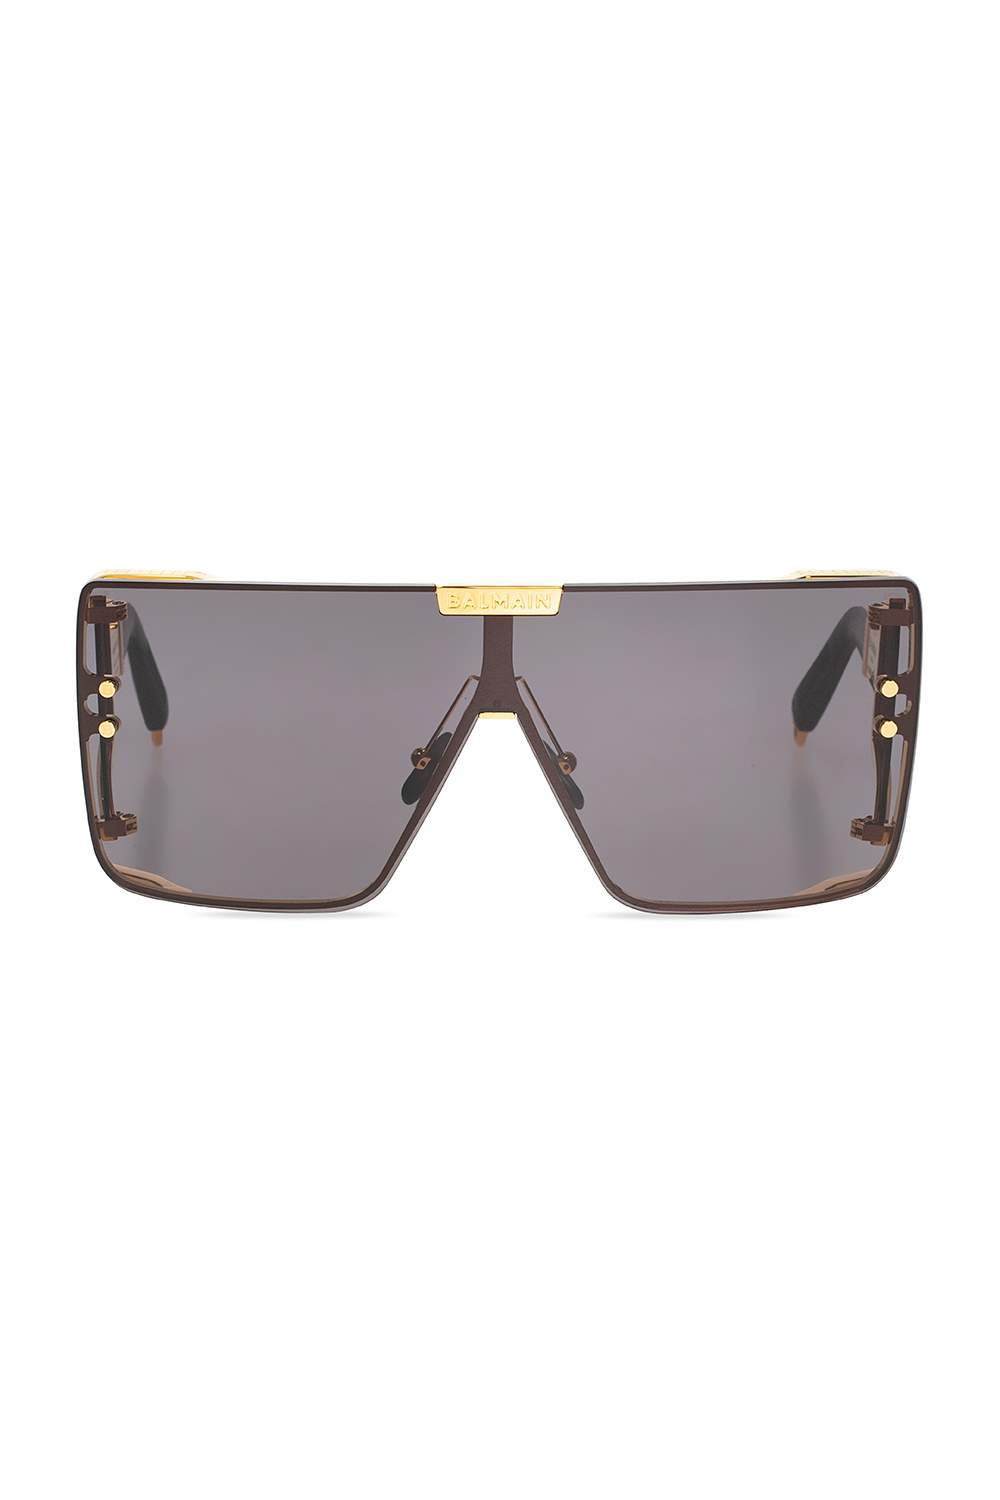 ‘Wonder Boy’ sunglasses Balmain - Vitkac Australia